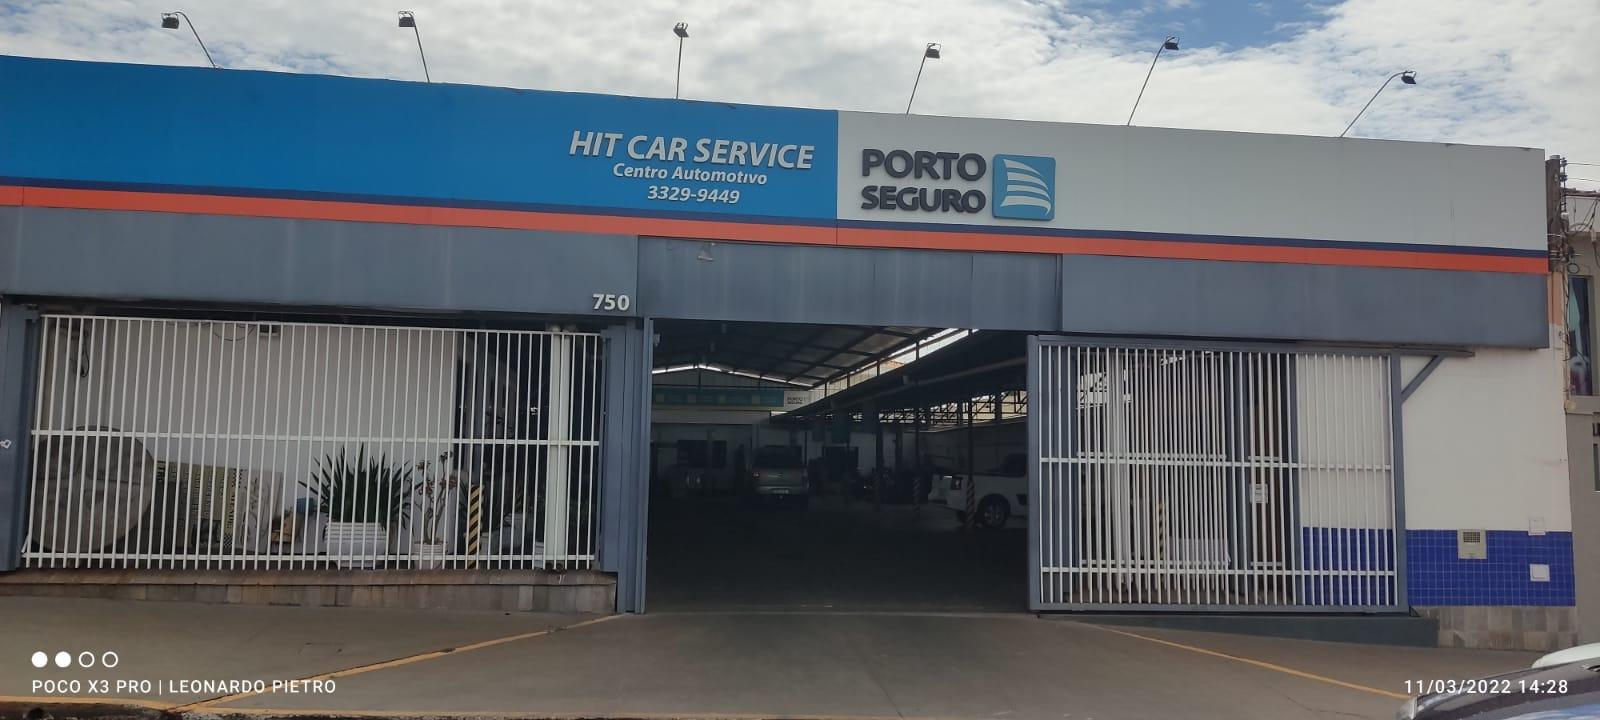 Hitcar Service - Centro Automotivo Porto Segugro